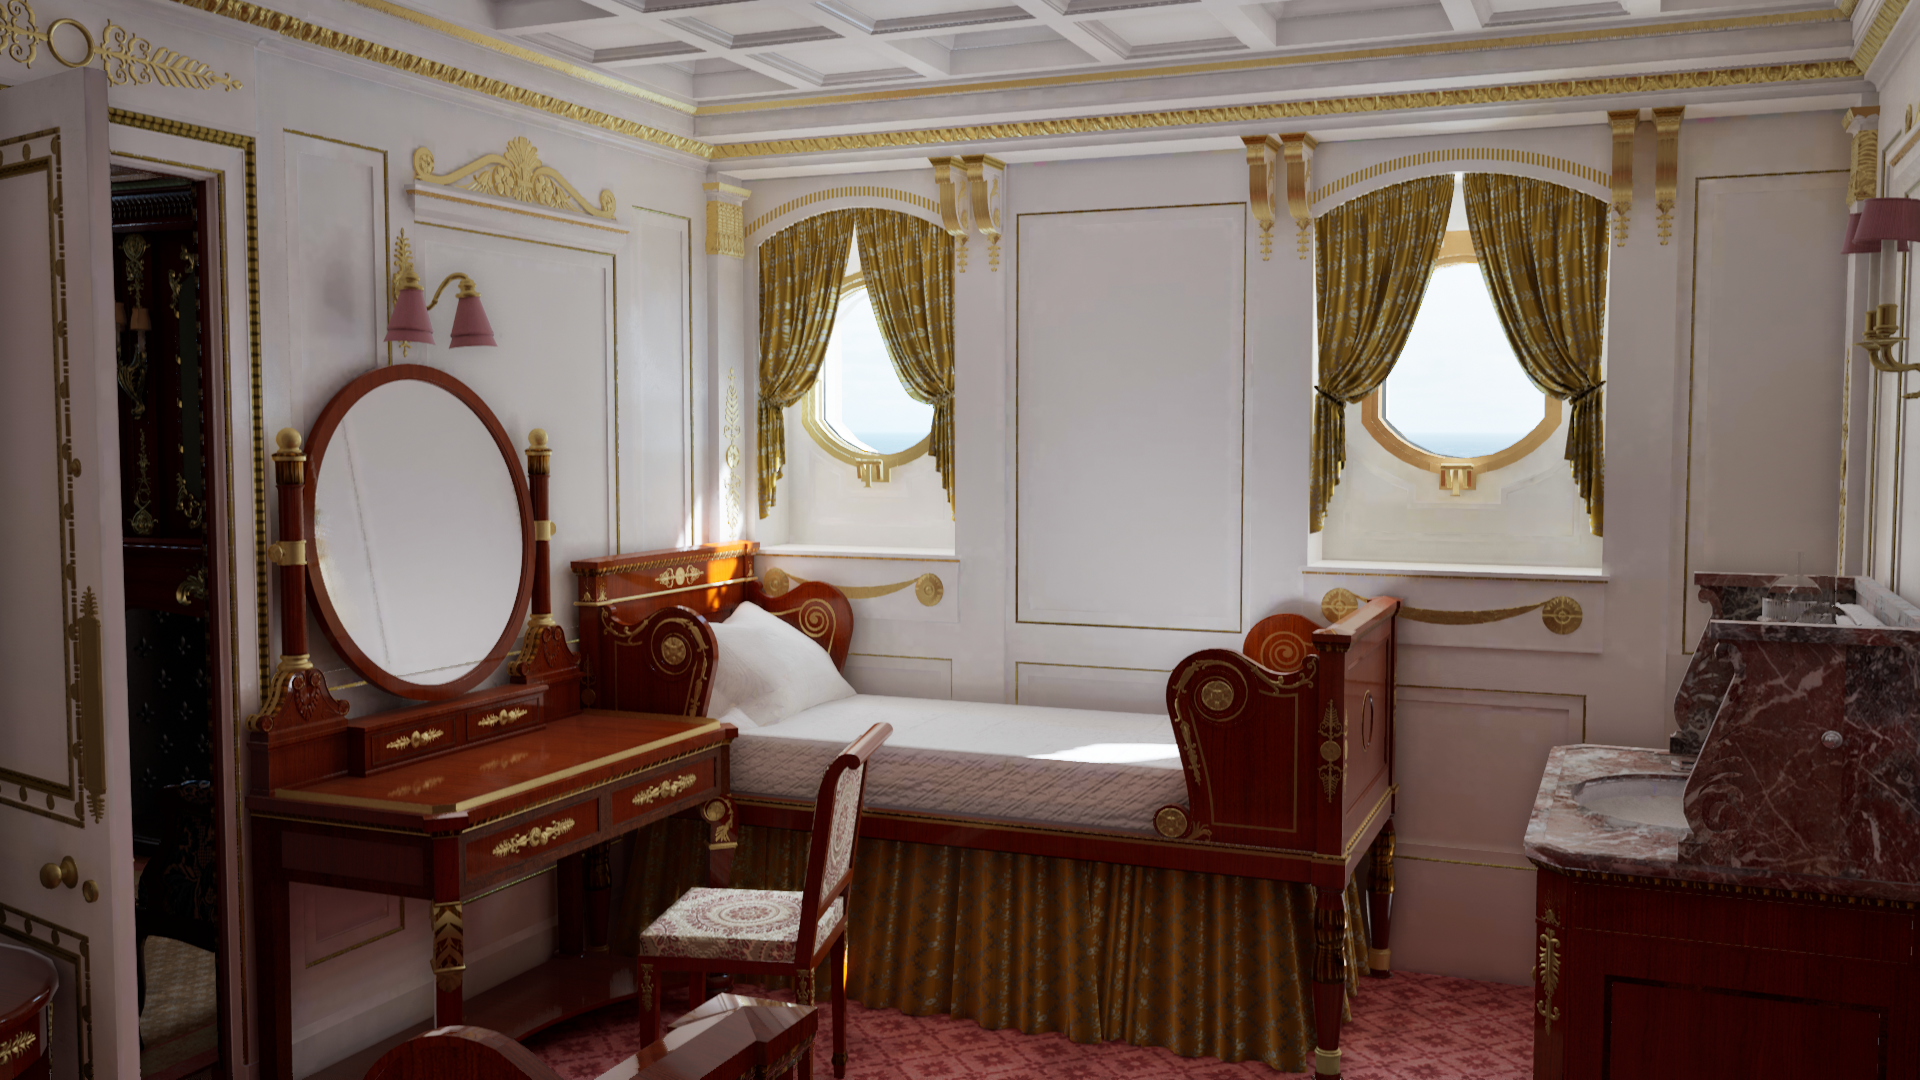 General 1920x1080 Titanic Demo401 interior bed mirror chair window architecture